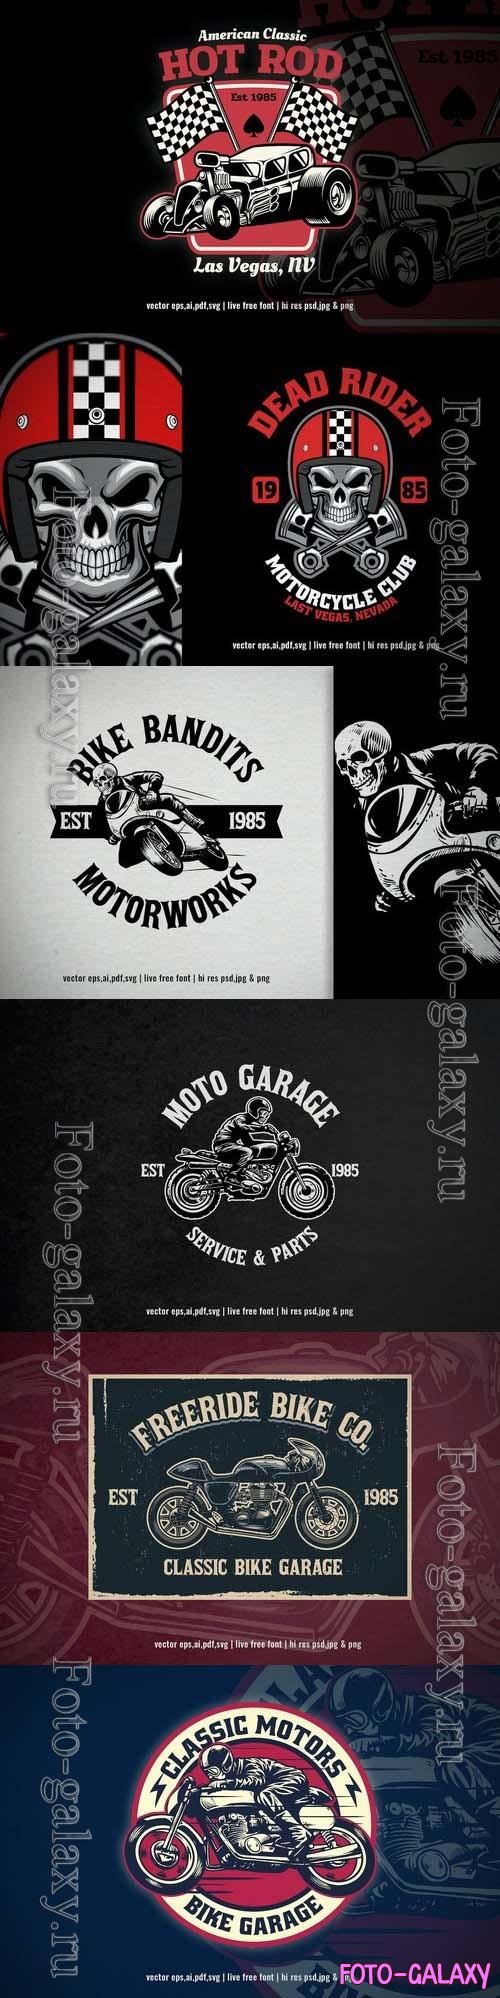 Motorcycle club rider vintage logo